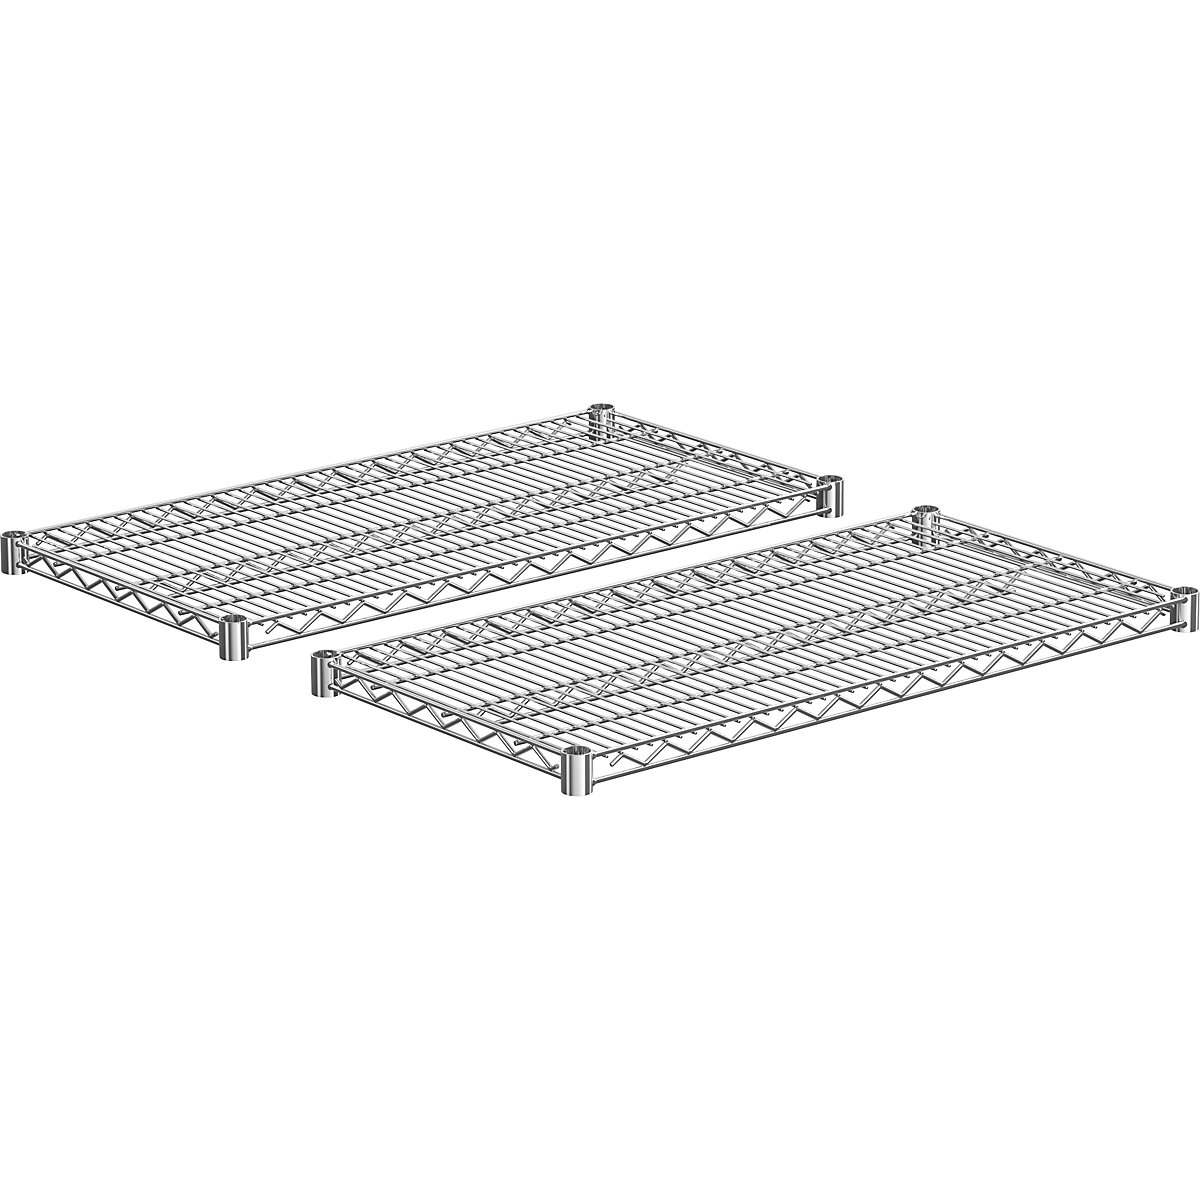 Shelf for steel mesh shelf unit, chrome plated, max. shelf load 250 kg, width 910 mm, depth 460 mm, pack of 2